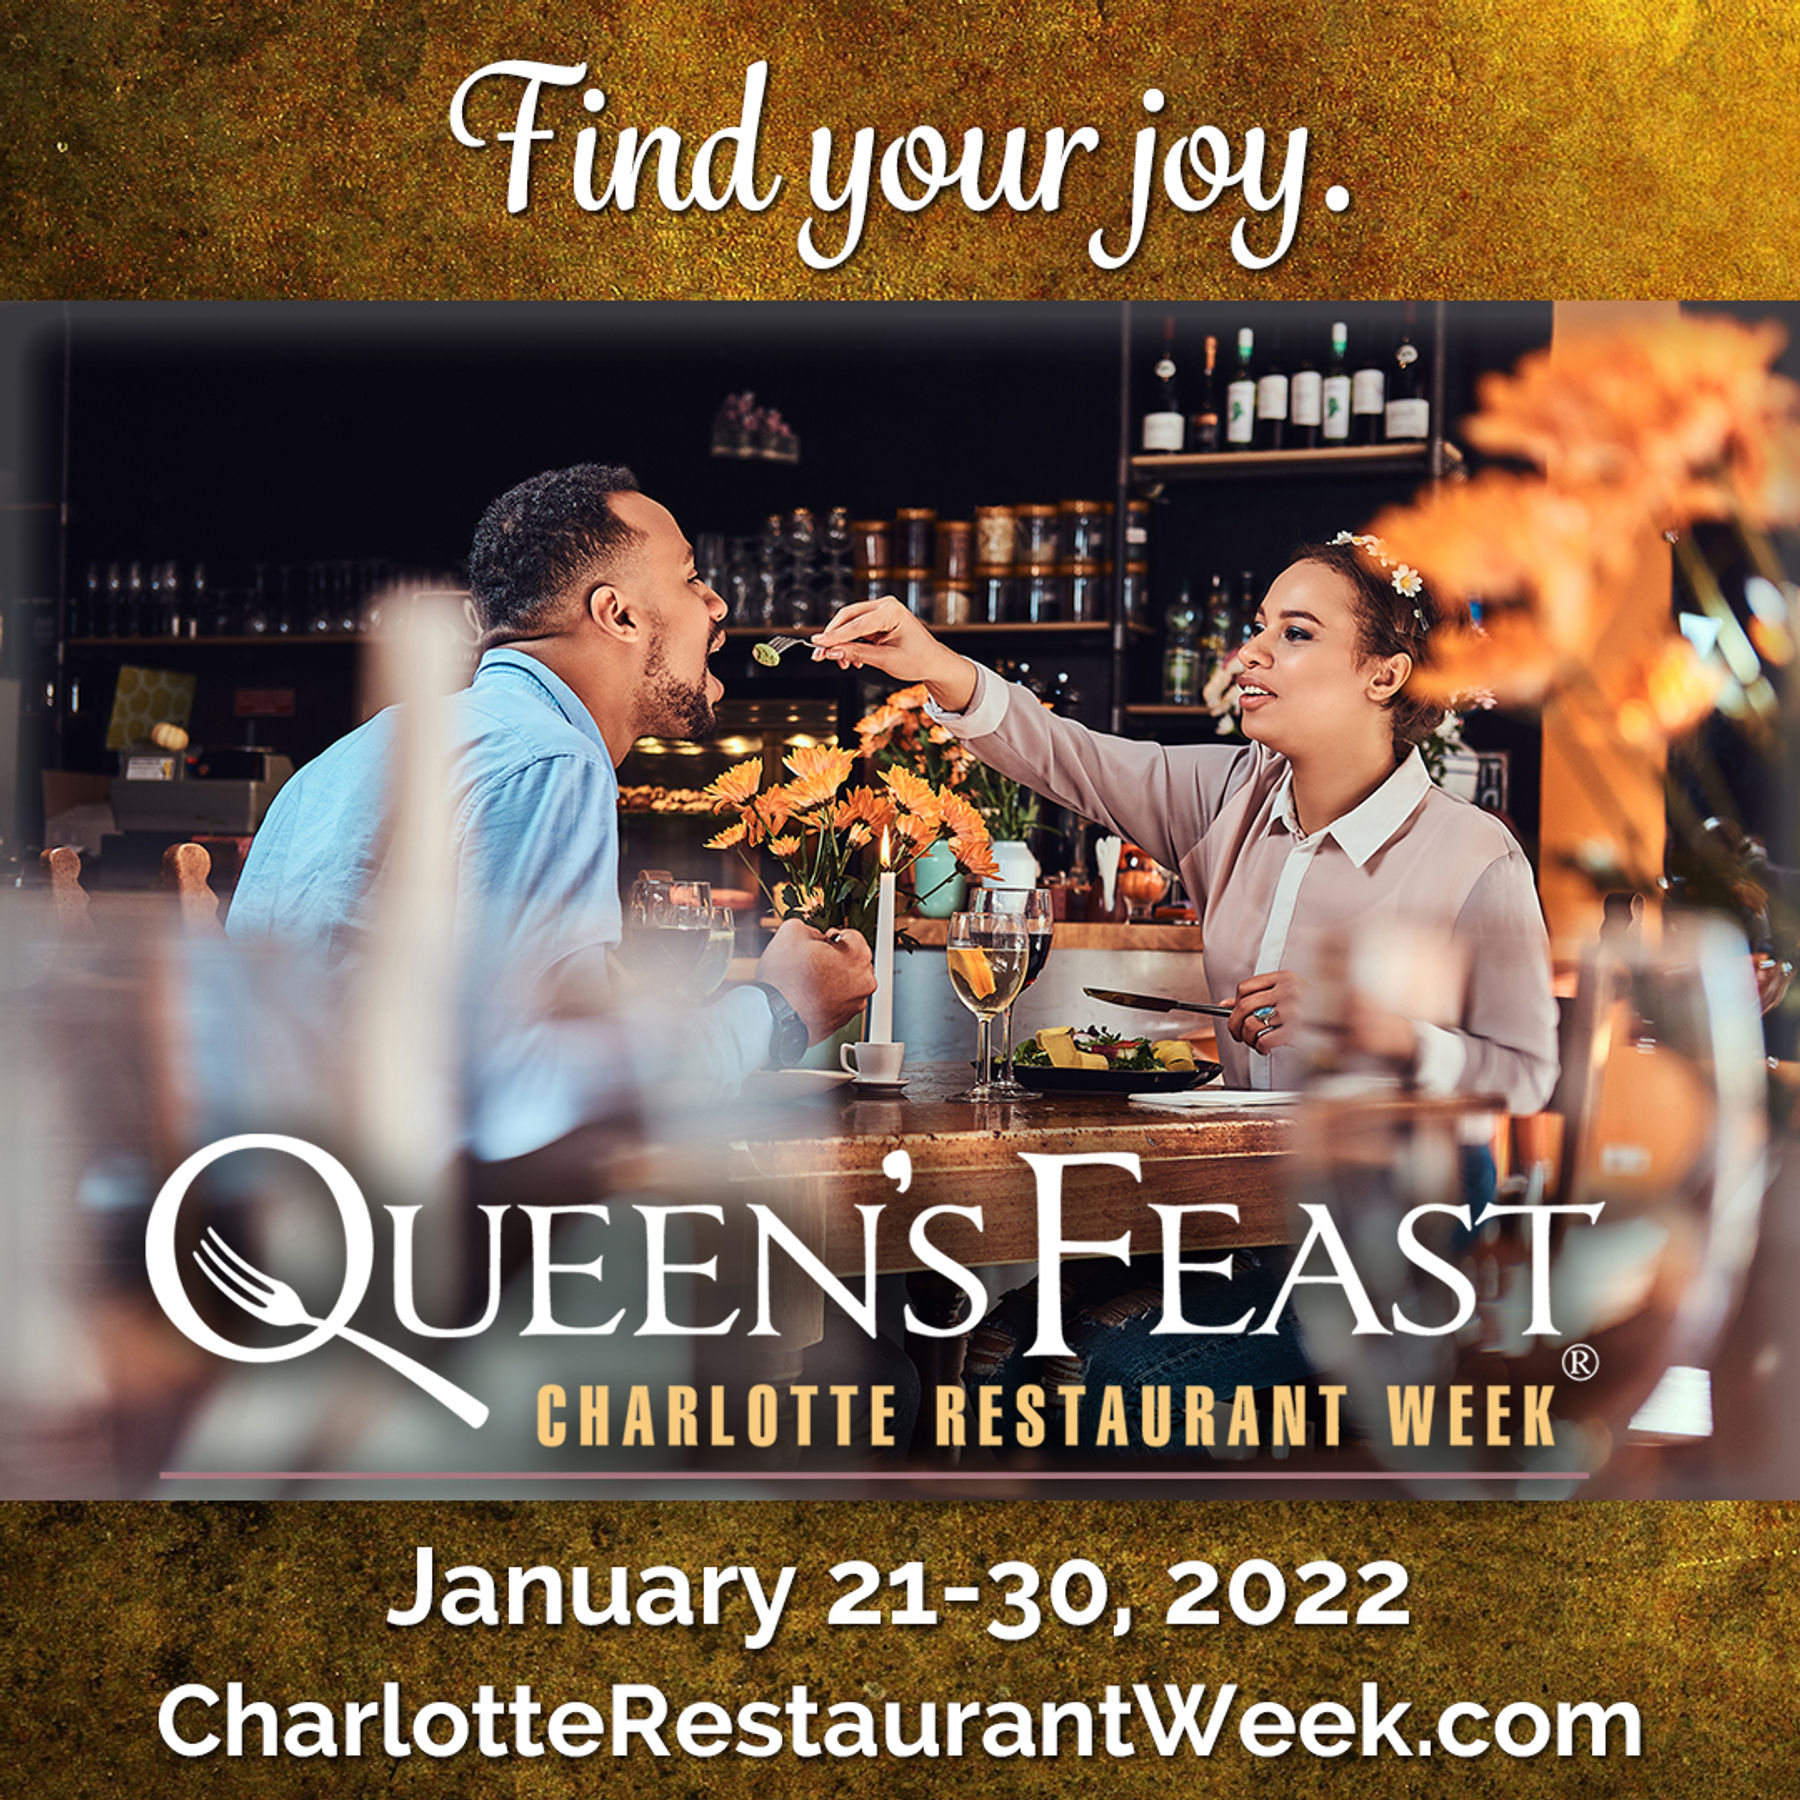 Queen’s Feast Charlotte Restaurant Week® Uptown Charlotte, NC